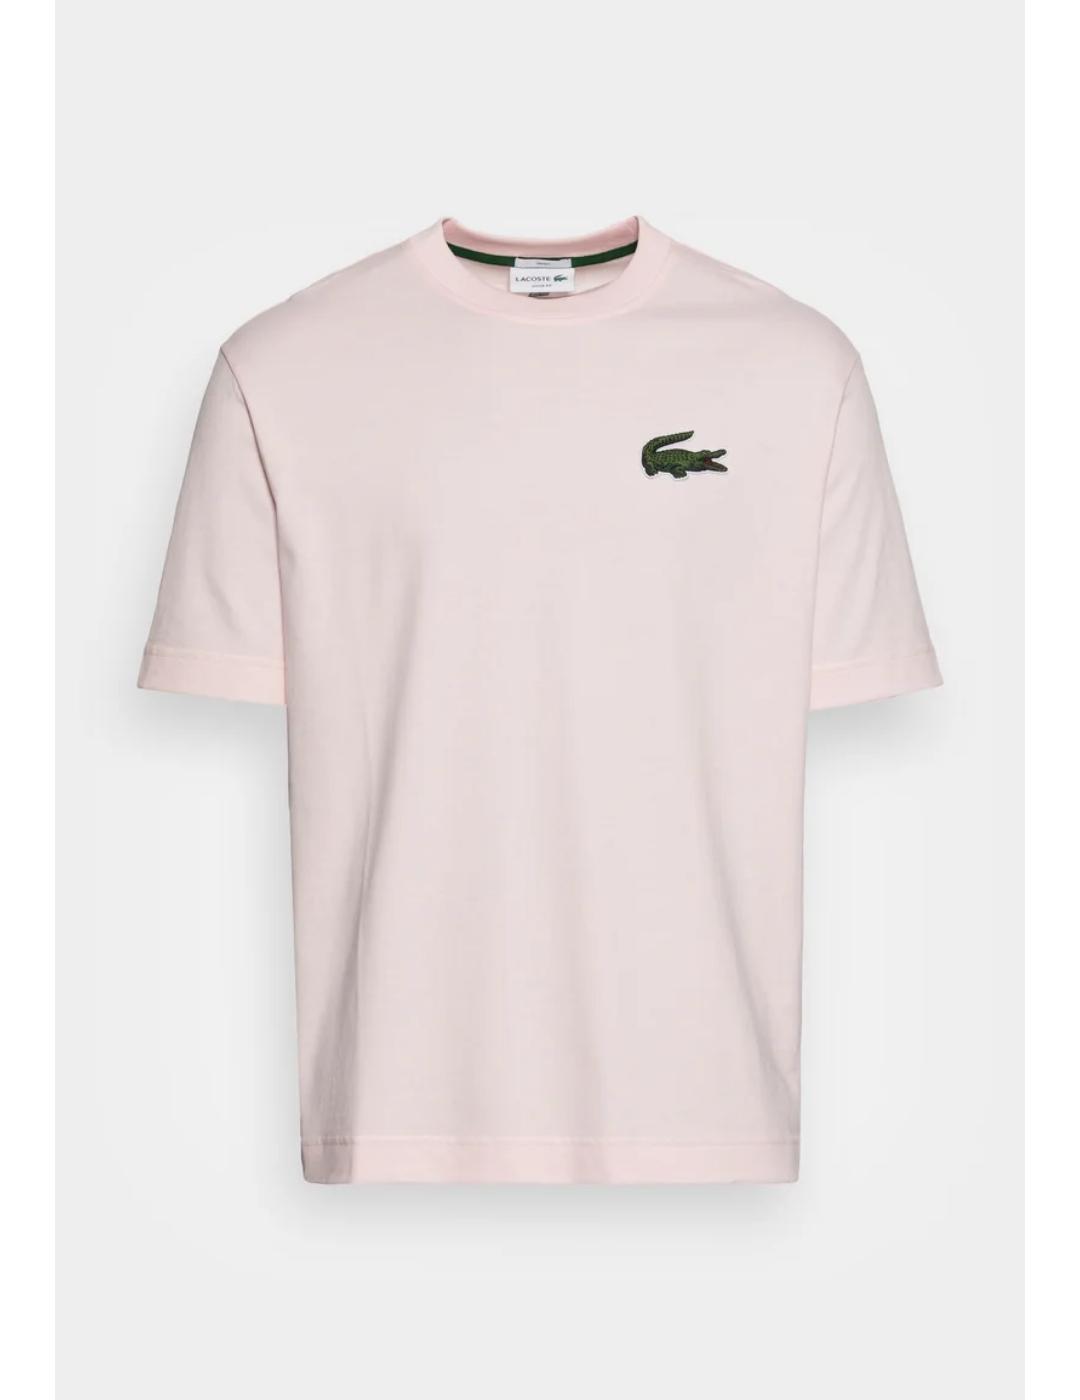 Camiseta Lacoste rosa logo grande para hombre